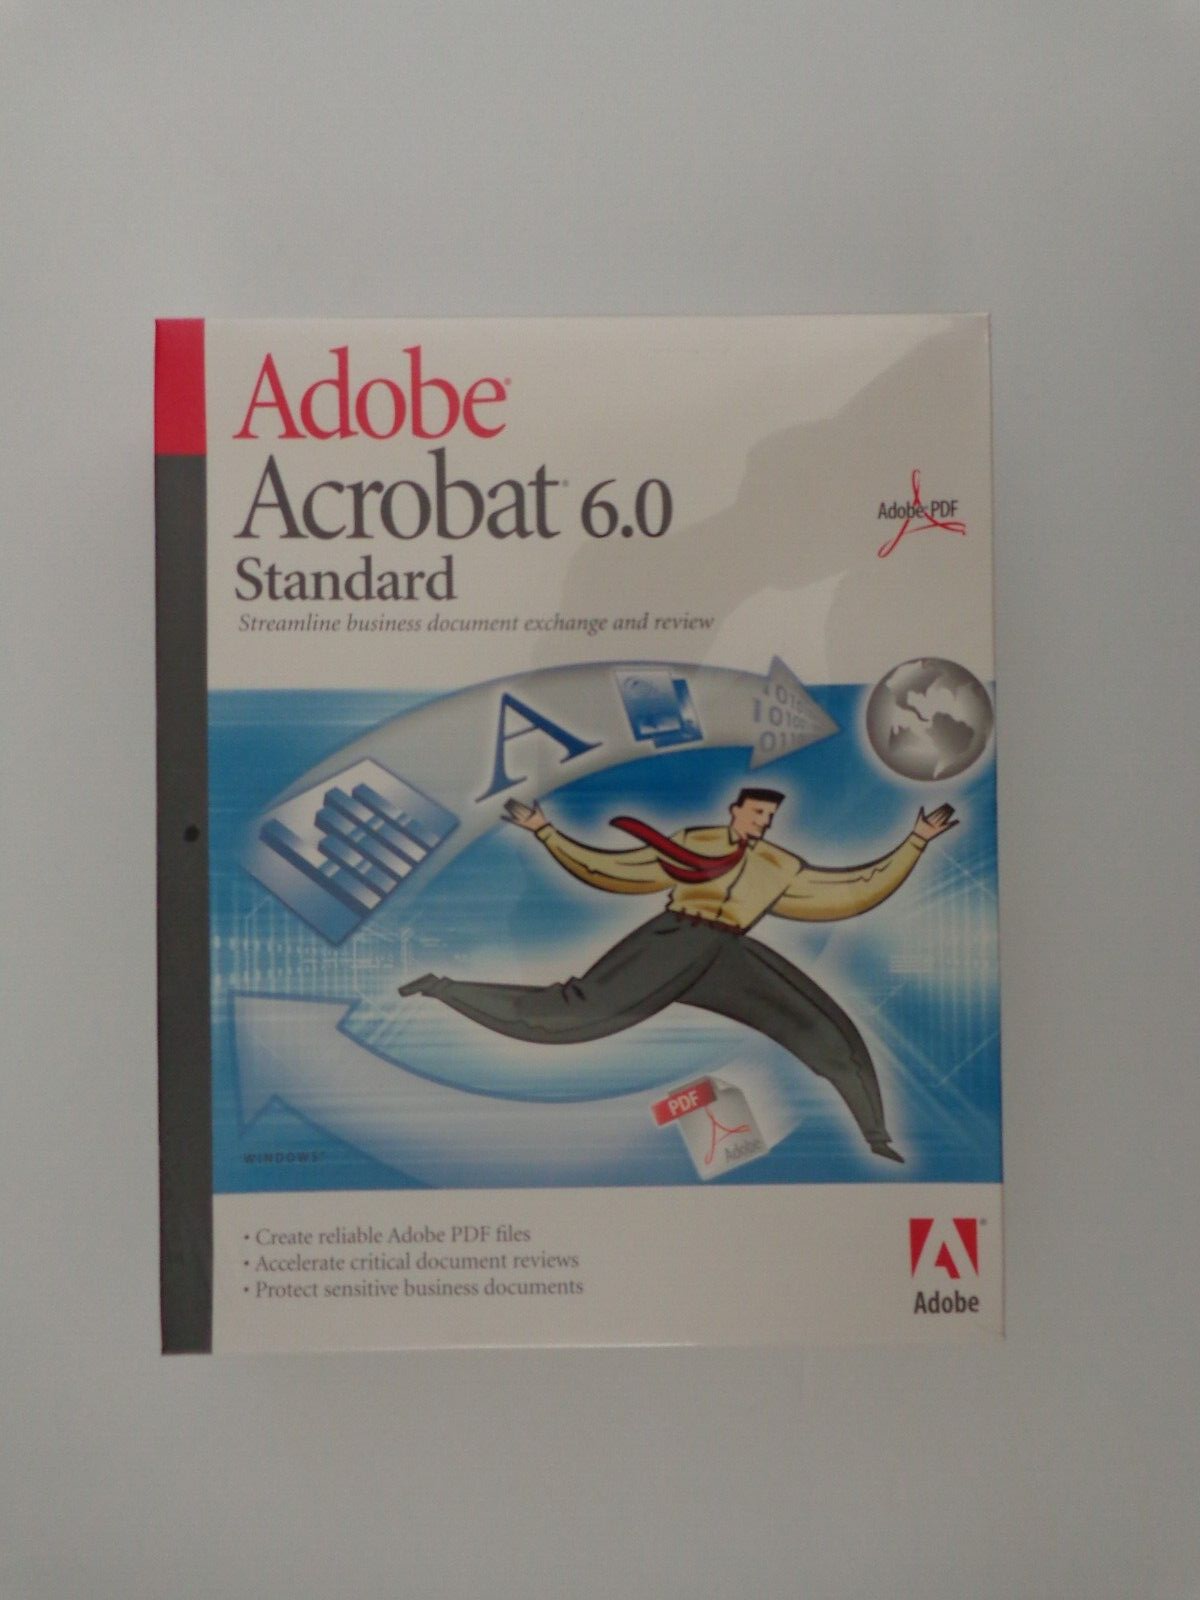 India Omgaan met ik heb nodig Adobe Acrobat 6.0 Standard (Retail) (1 User/s) - Full Version for Windows  22001617 for sale online | eBay